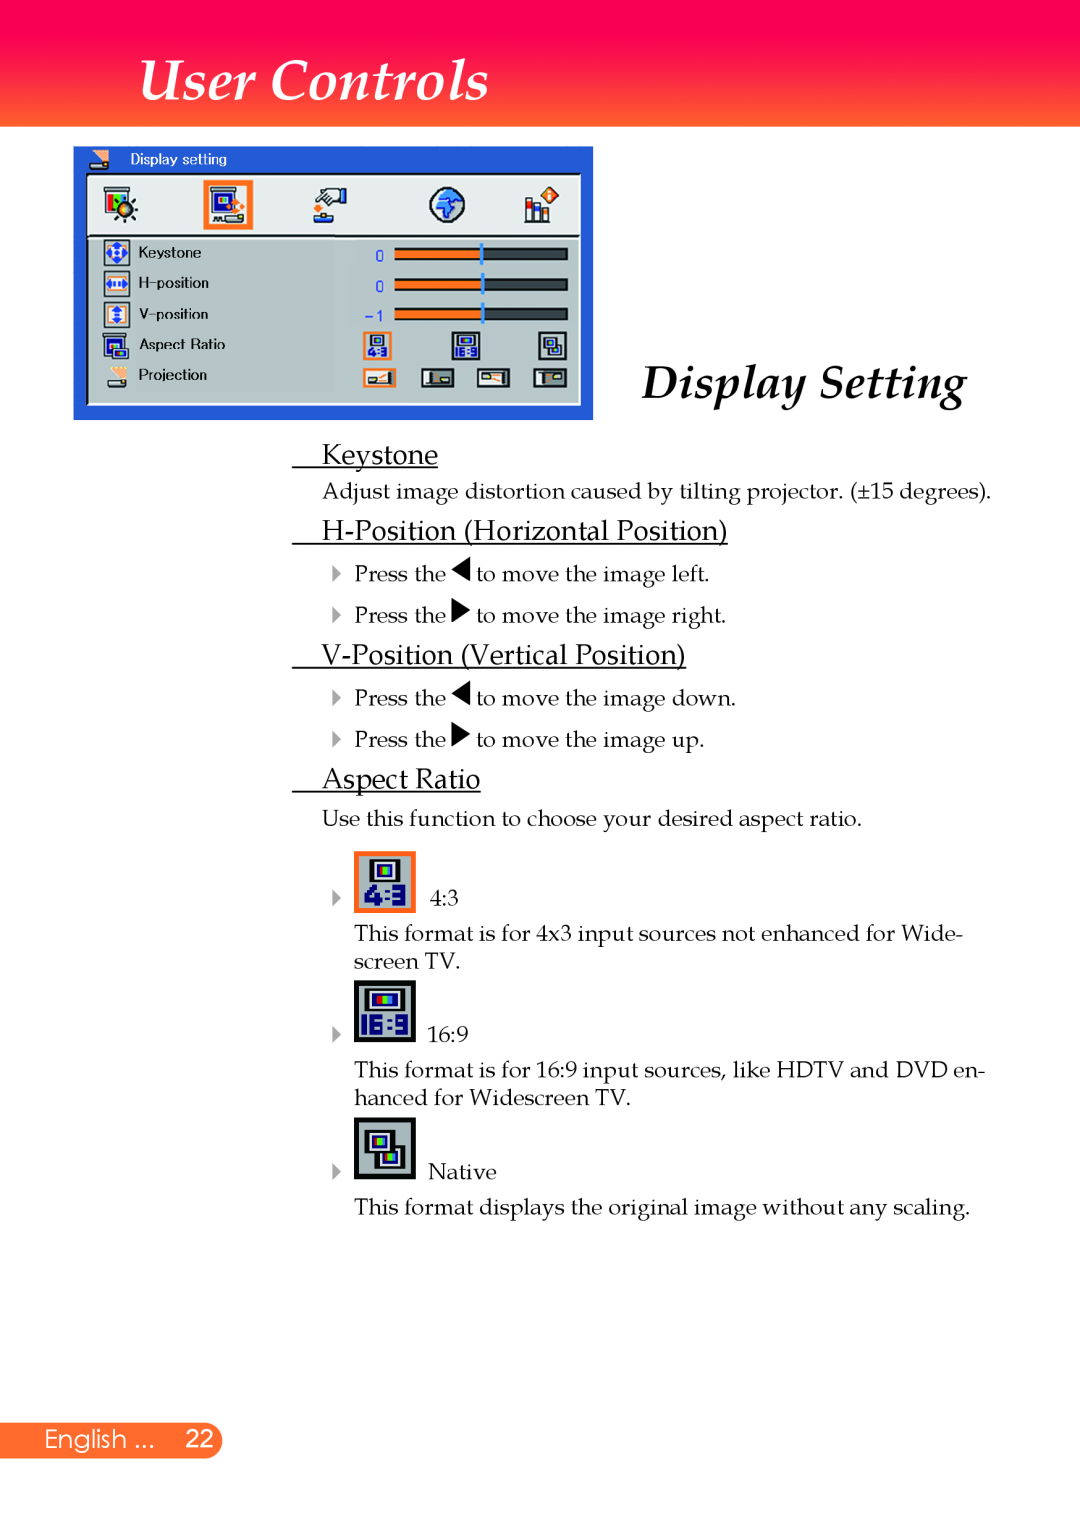 InFocus X9 Display Setting, Keystone, H-Position Horizontal Position, V-Position Vertical Position, Aspect Ratio, English 